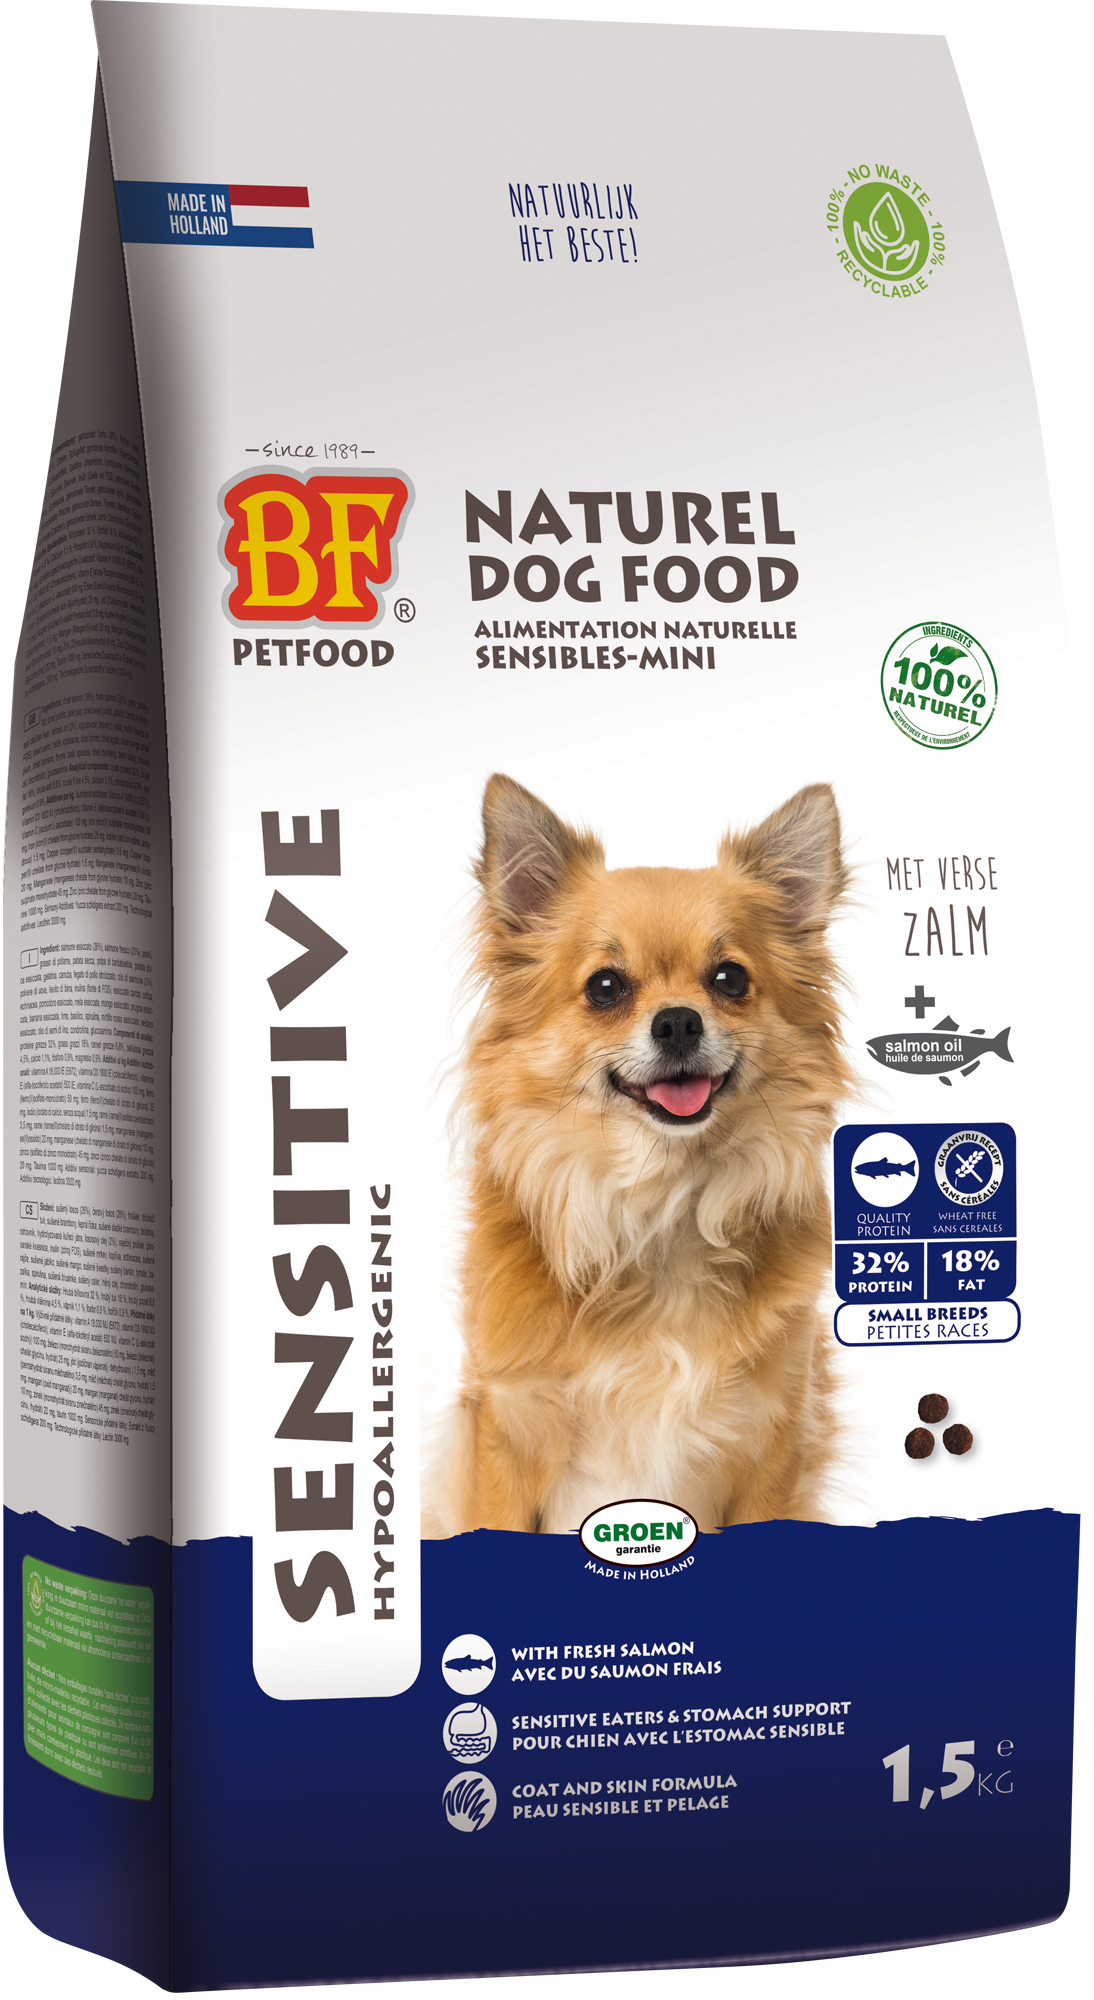  BF PETFOOD - BIOFOOD MINI Sensitive 32/18 Sin Cereales para Perro Adulto de Tamaño Pequeño Sensible